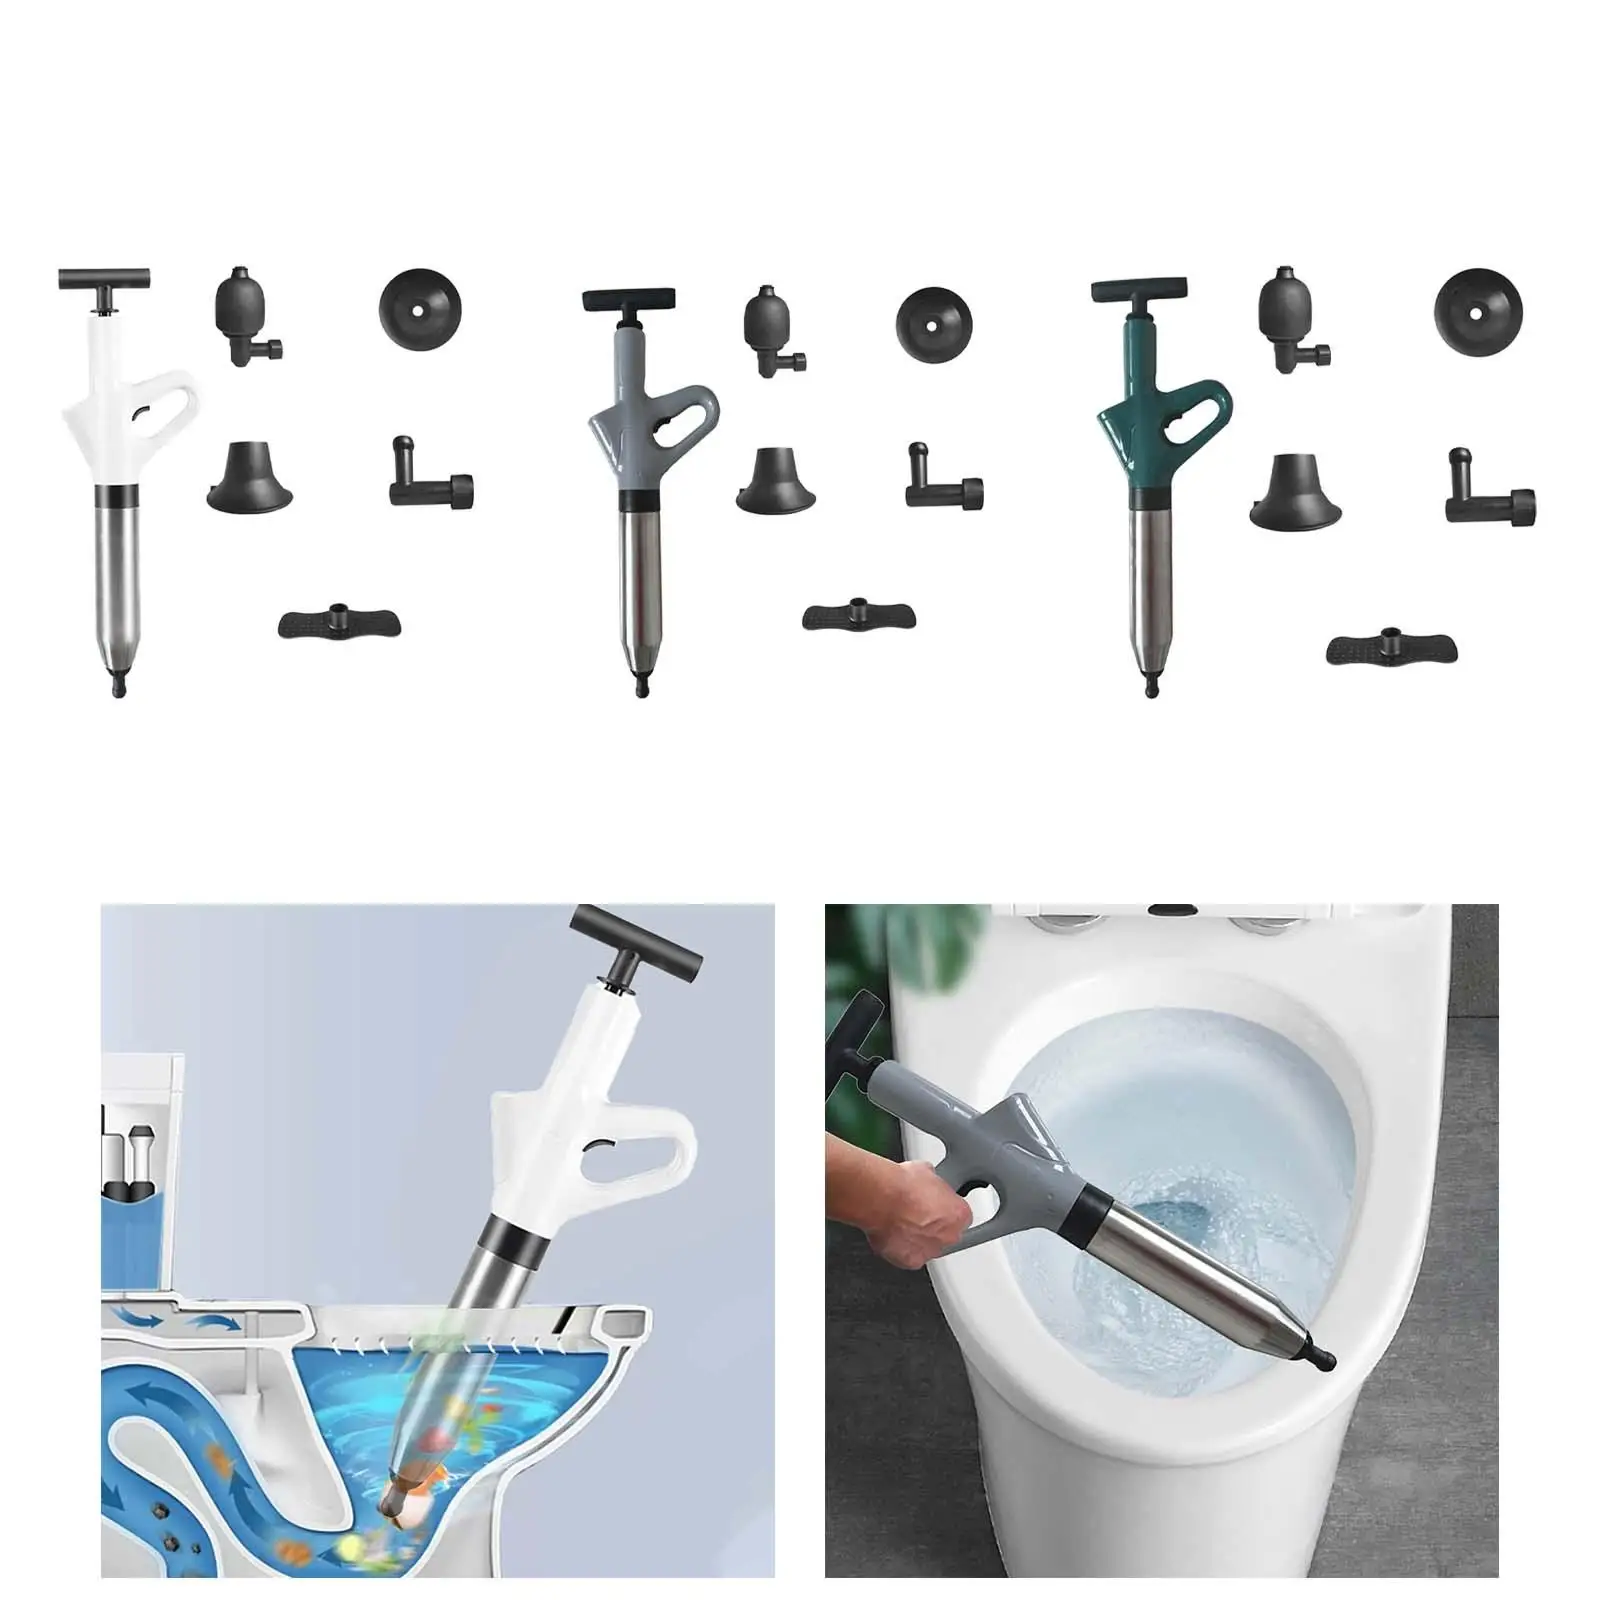 Toilet Plunger Manual Pneumatic Drain Hair Clog Remover Plunger for Clogged Toilet Sewer Toilet Drain Blocked Pipe Kitchen